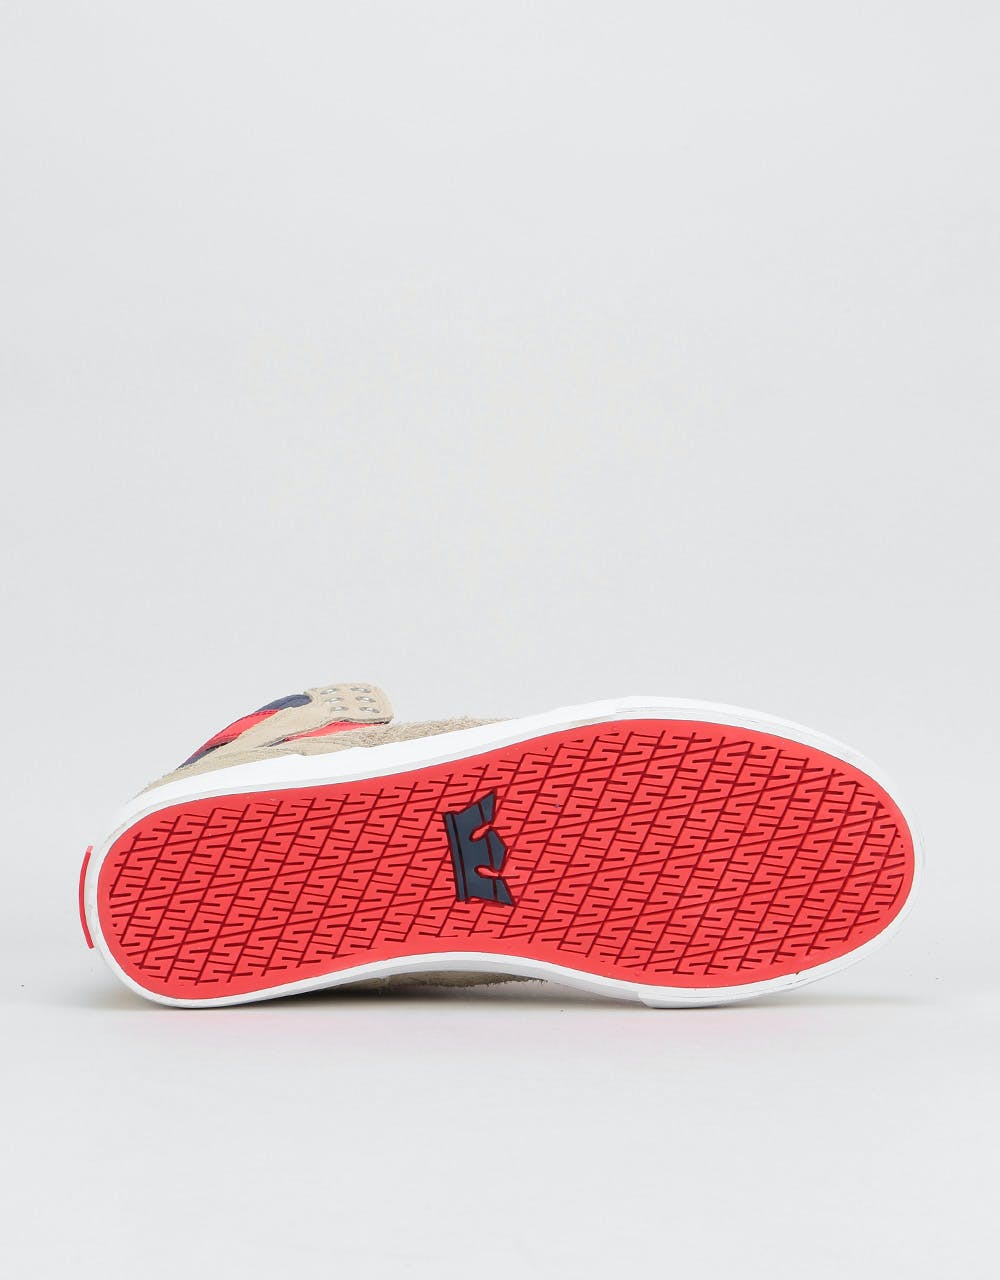 Supra Skytop Skate Shoes - Stone/Risk Red-White